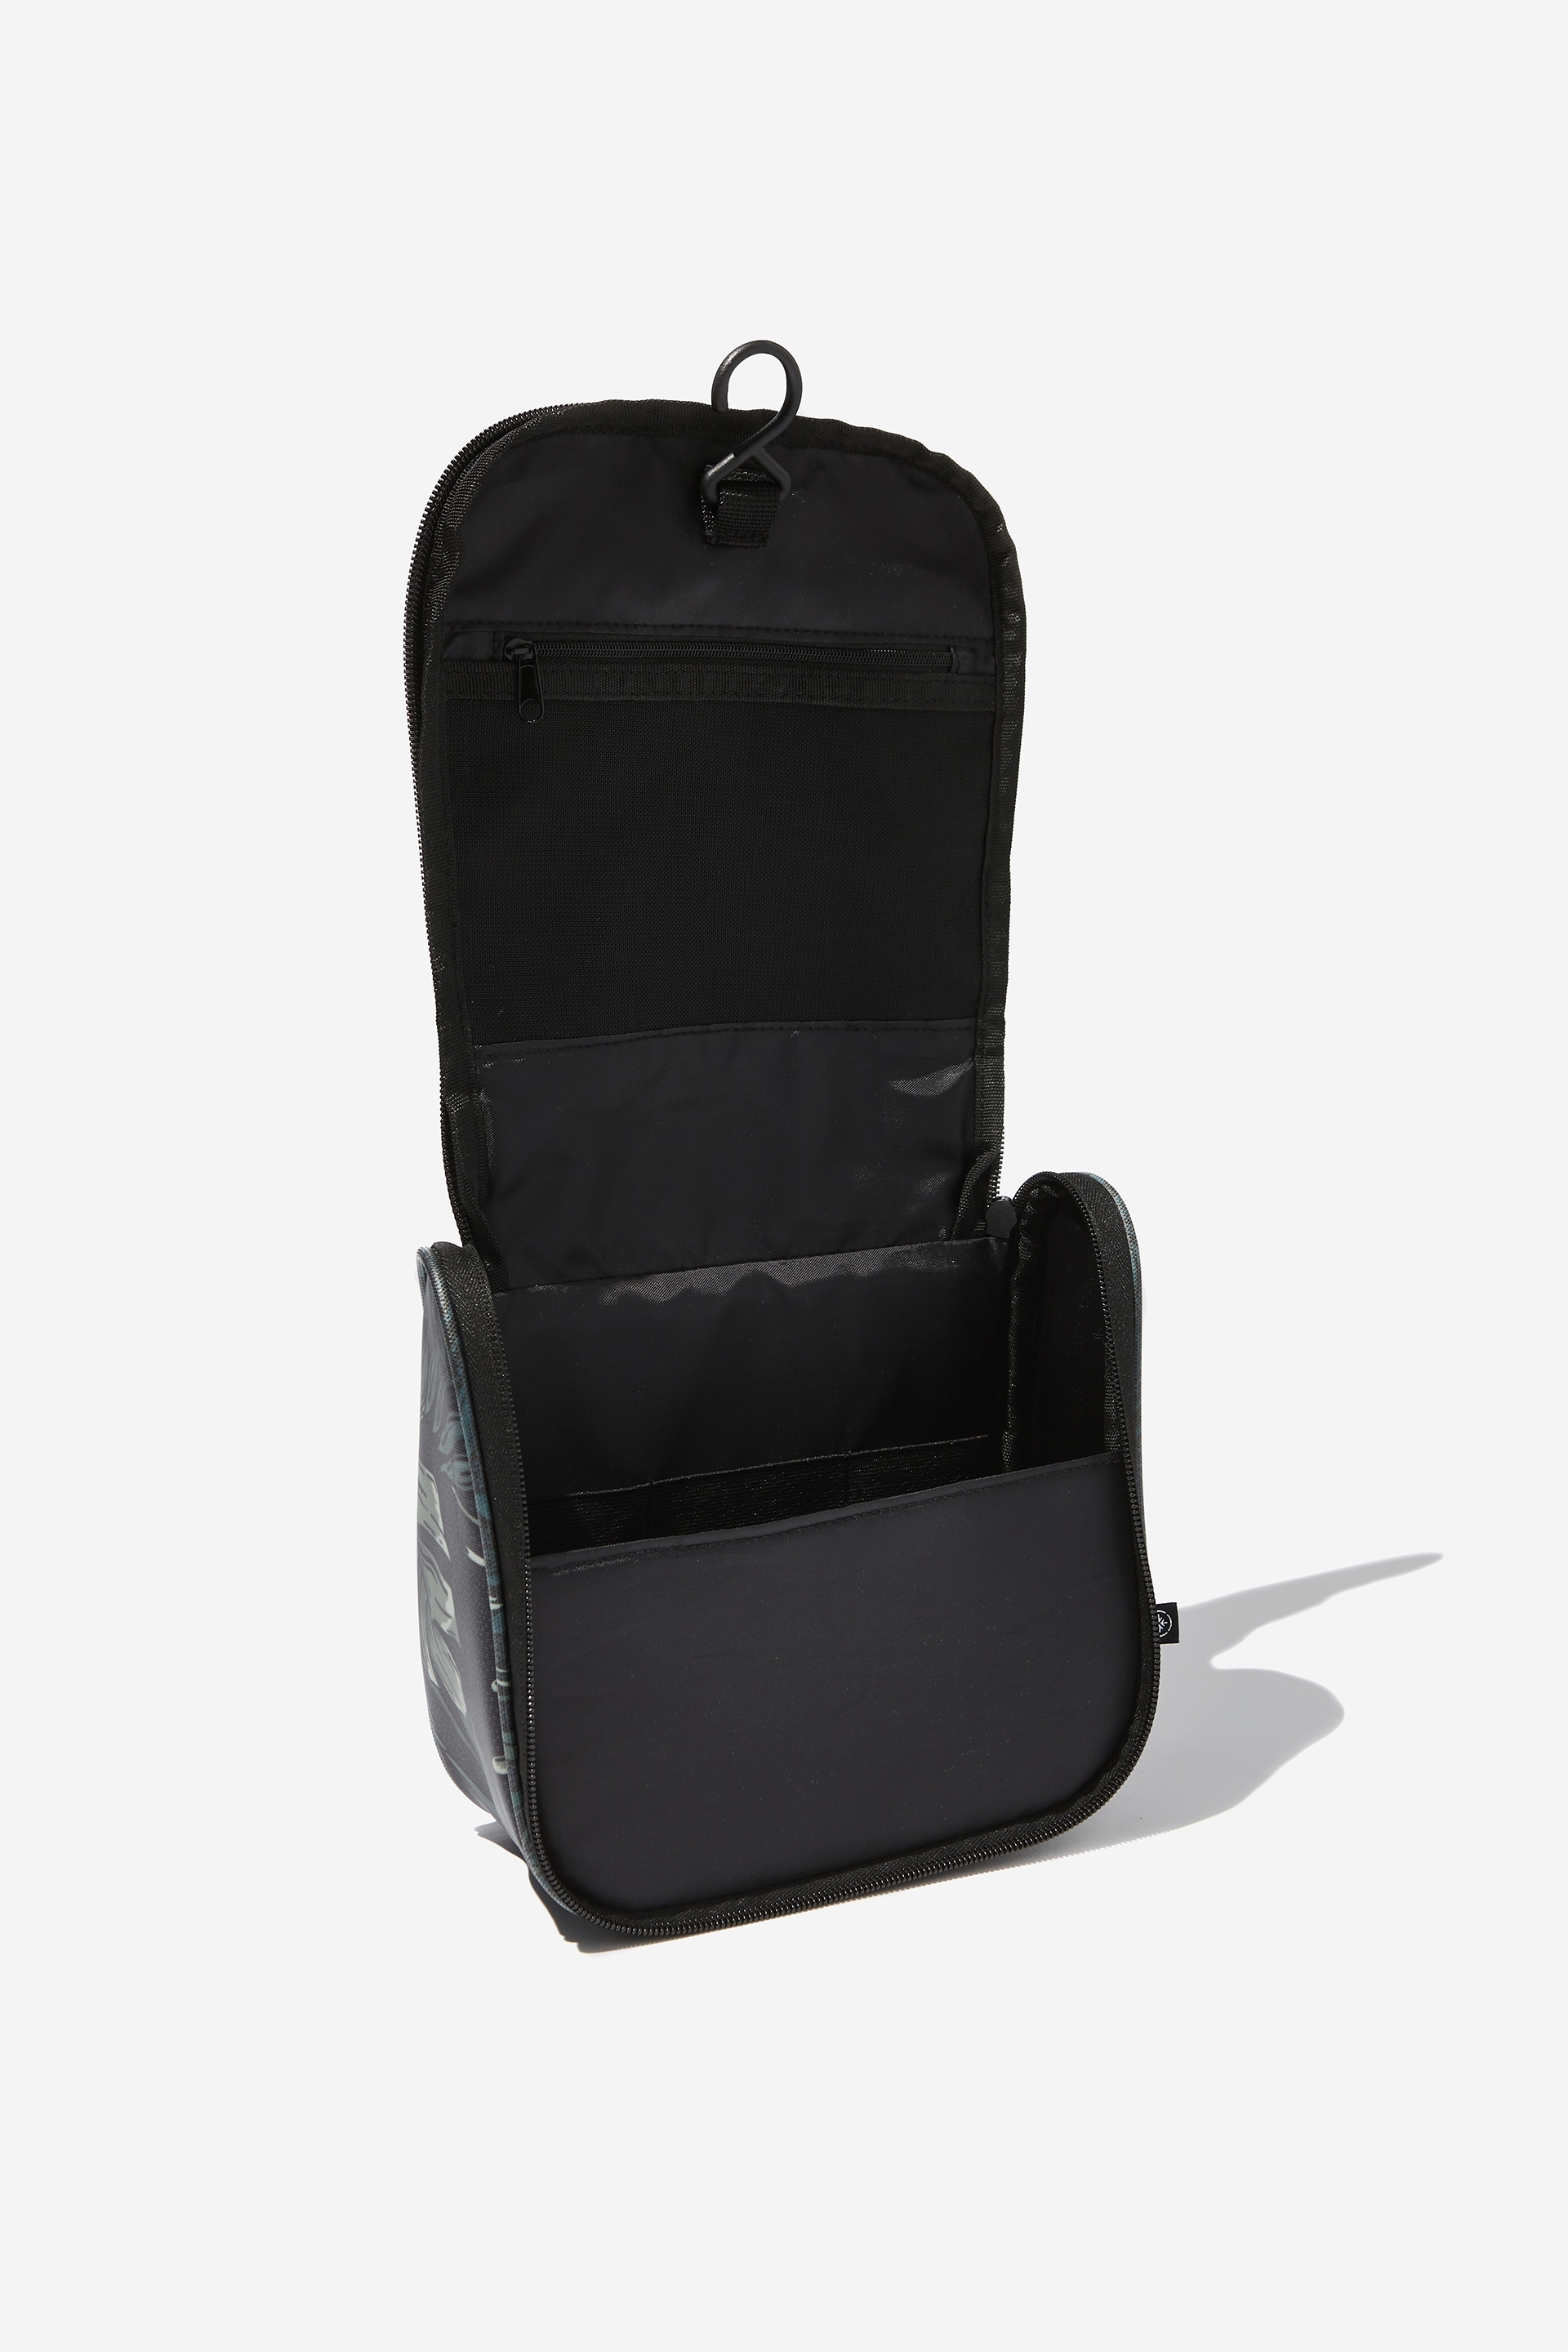 Vetelli Mens Hanging Toiletry Bag  Dopp Kit  Travel Accessories Bag One  Size Brown by Vetelli  Shop Online for Beauty in Australia